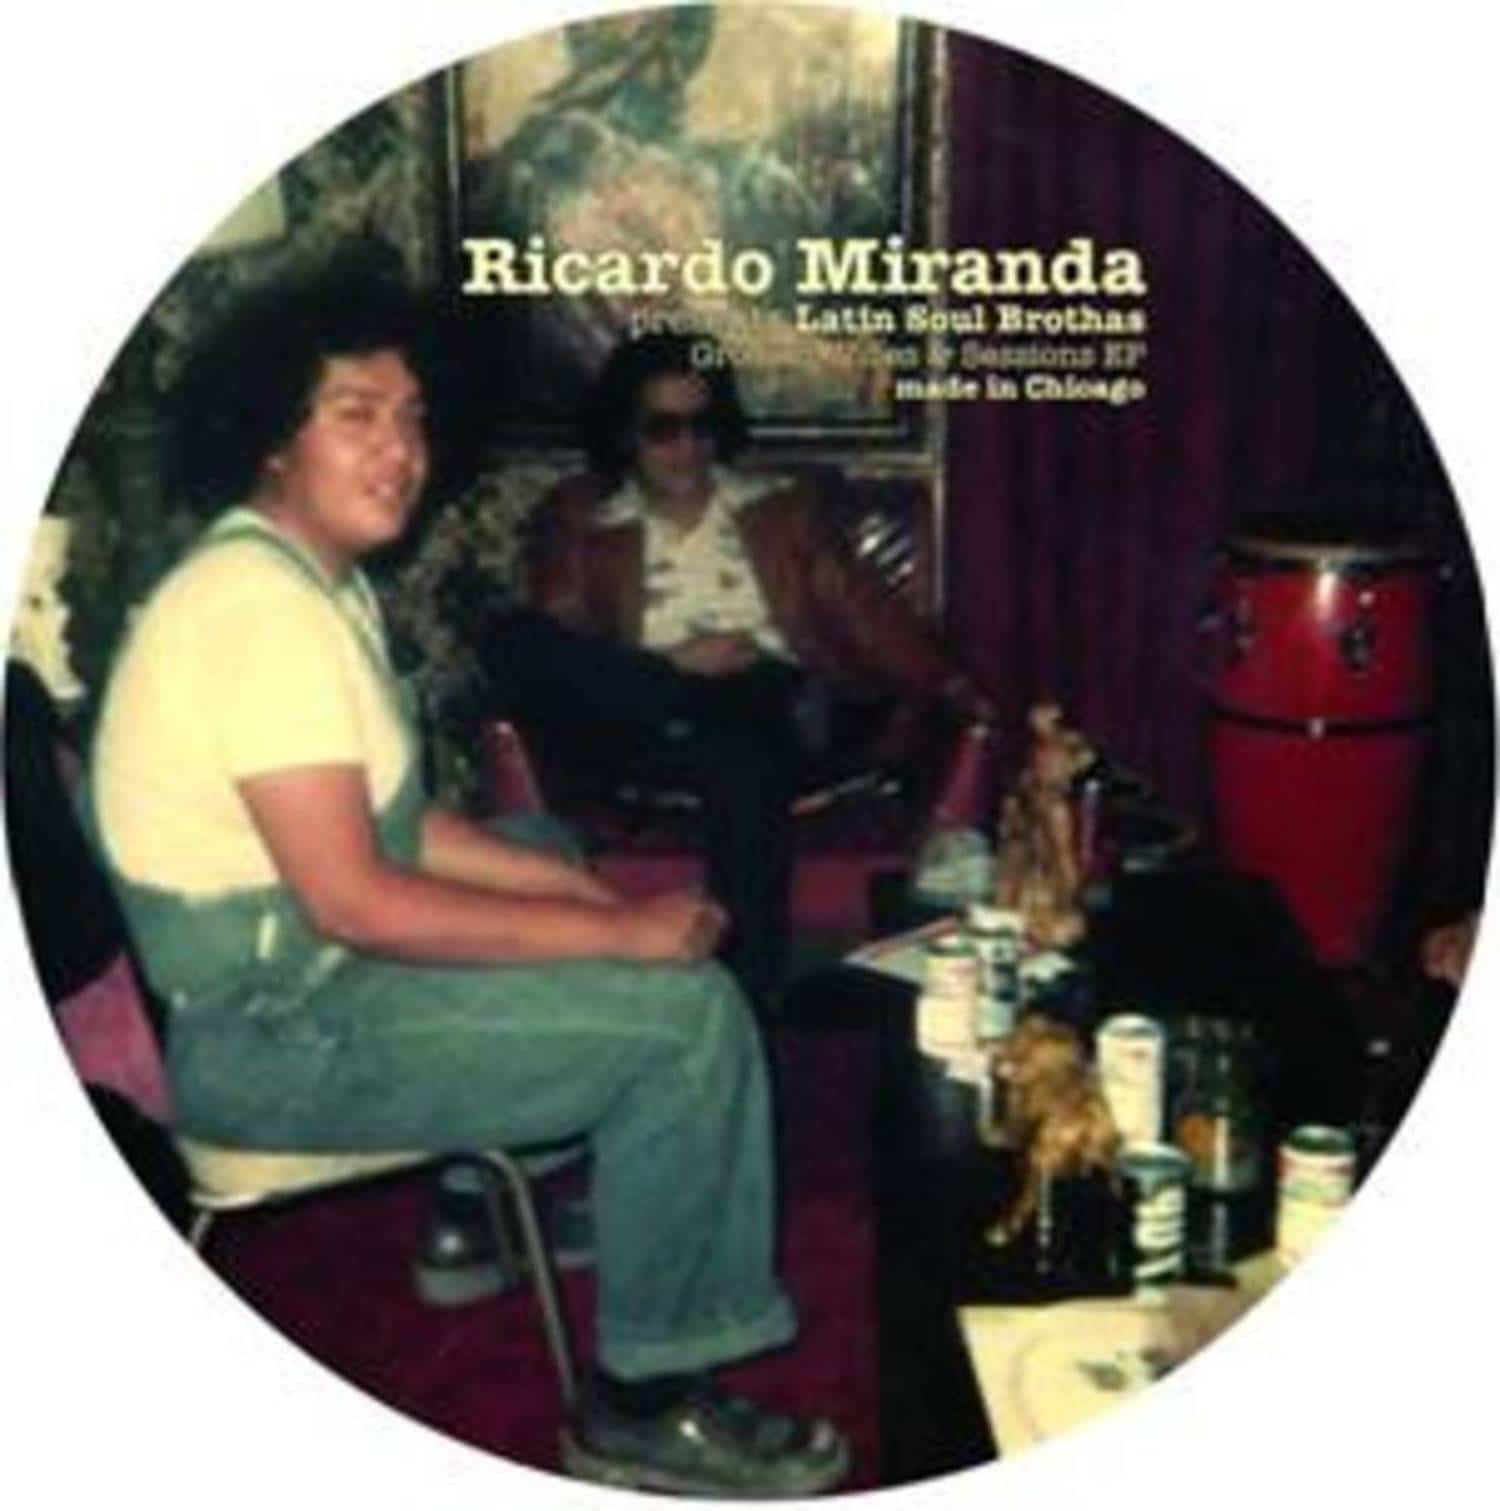 Ricardo Miranda presents the Latin Soul Brothas - GROOVES, VIBES & SESSIONS EP